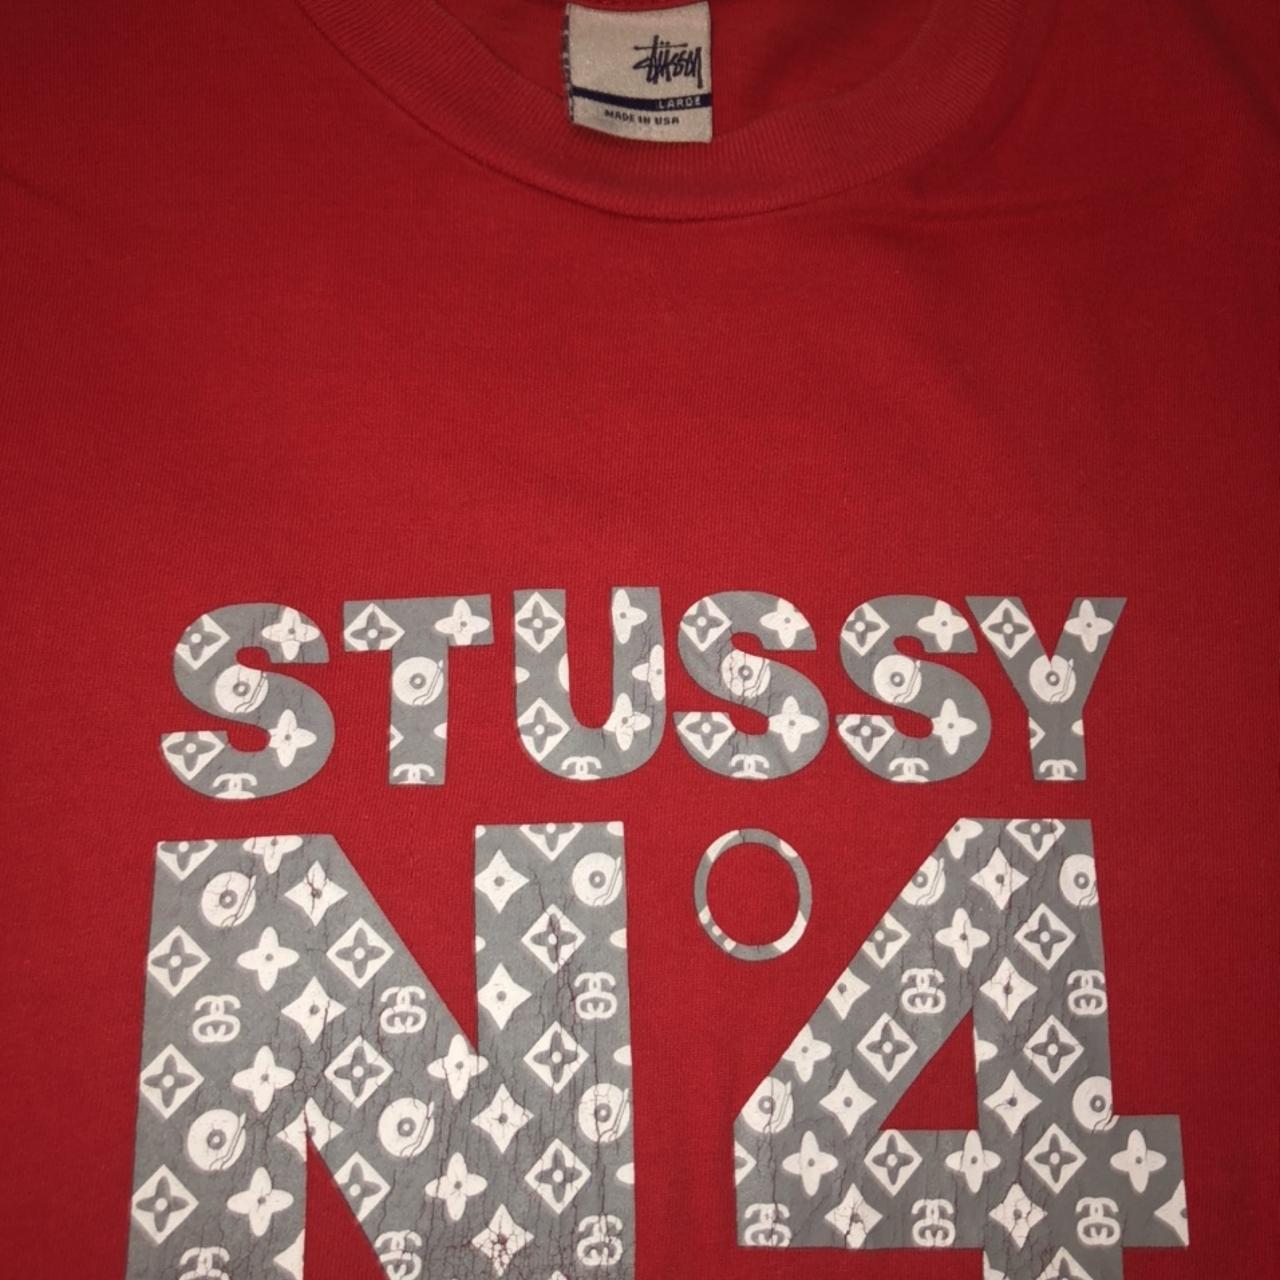 Vintage Stussy x Lv, Men's Fashion, Tops & Sets, Formal Shirts on